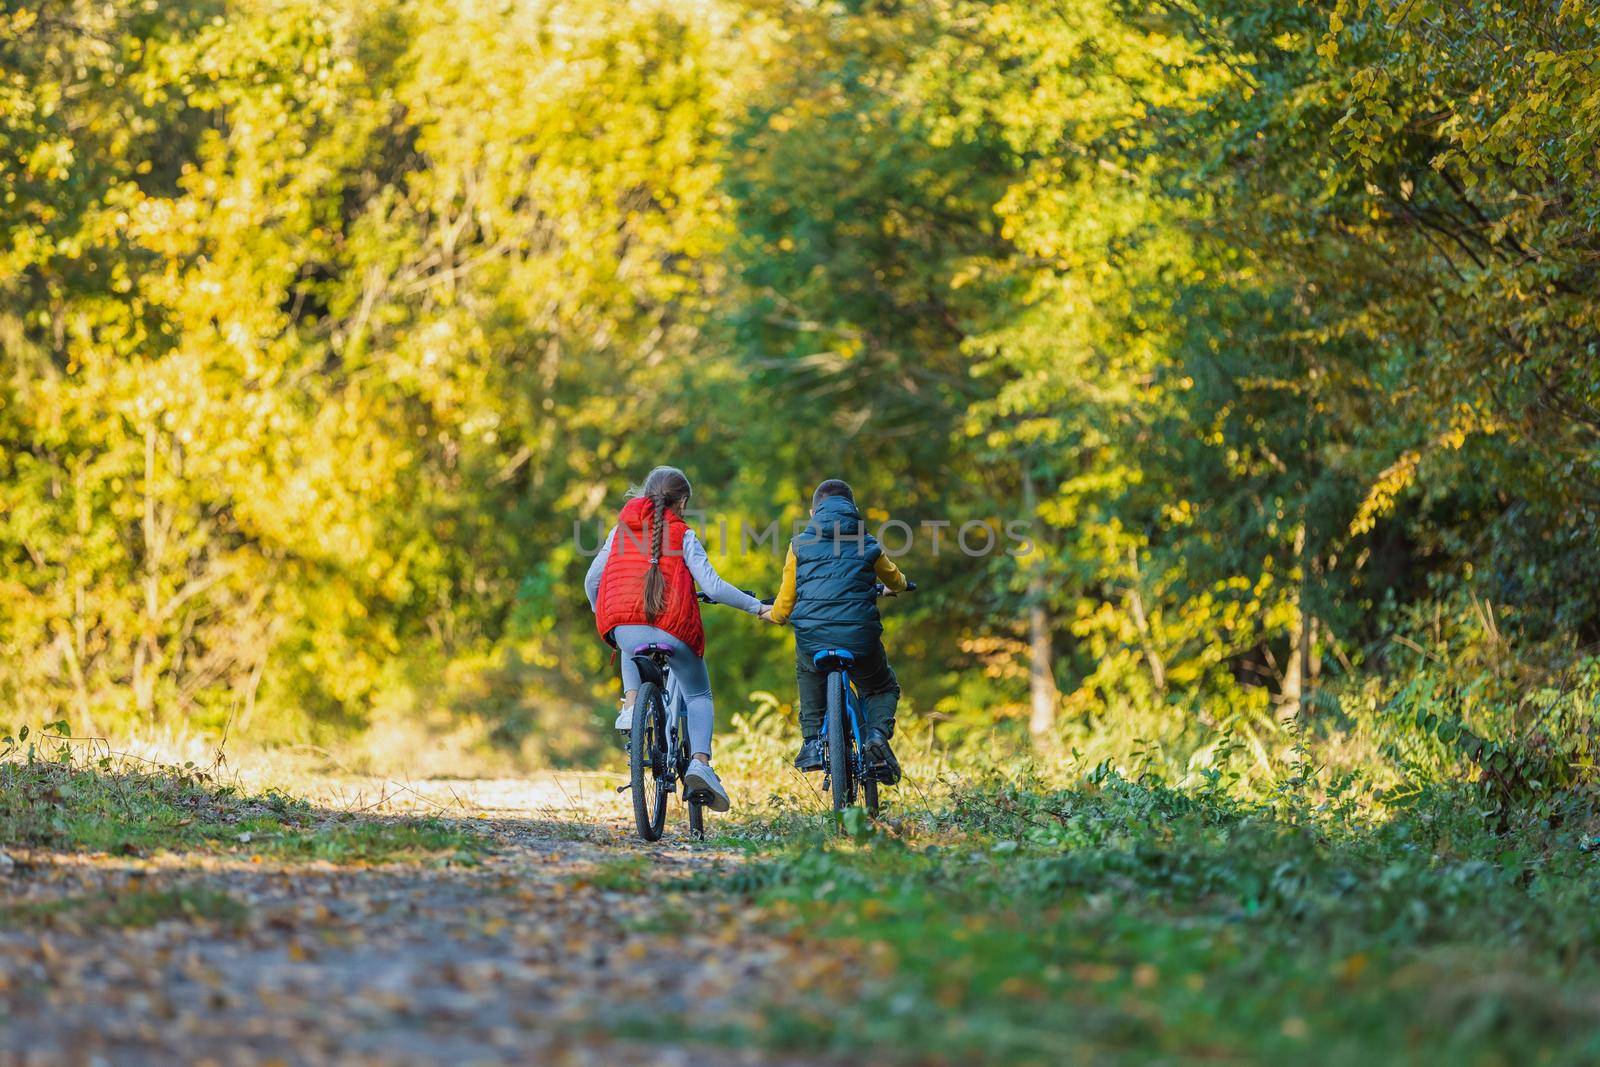 children ride a bike near the forest holding hands